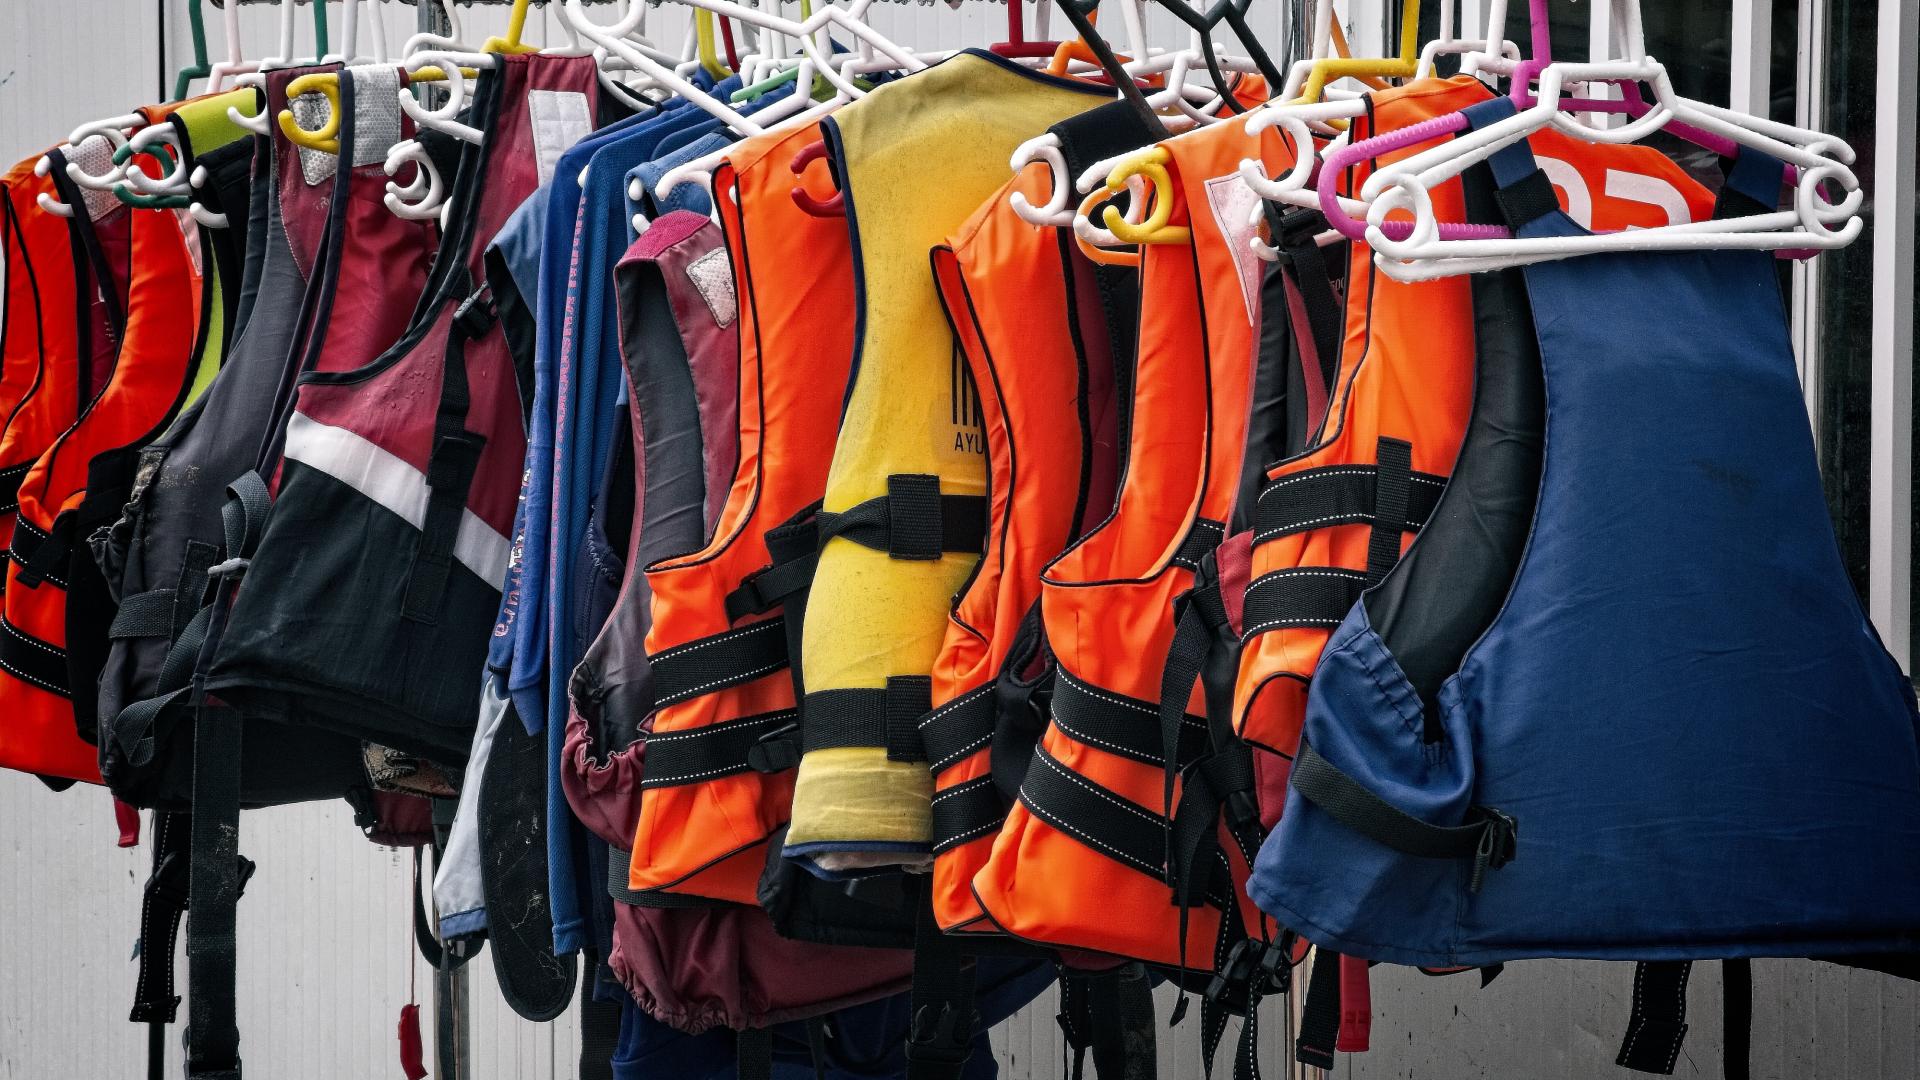 Life jackets hanging on rail